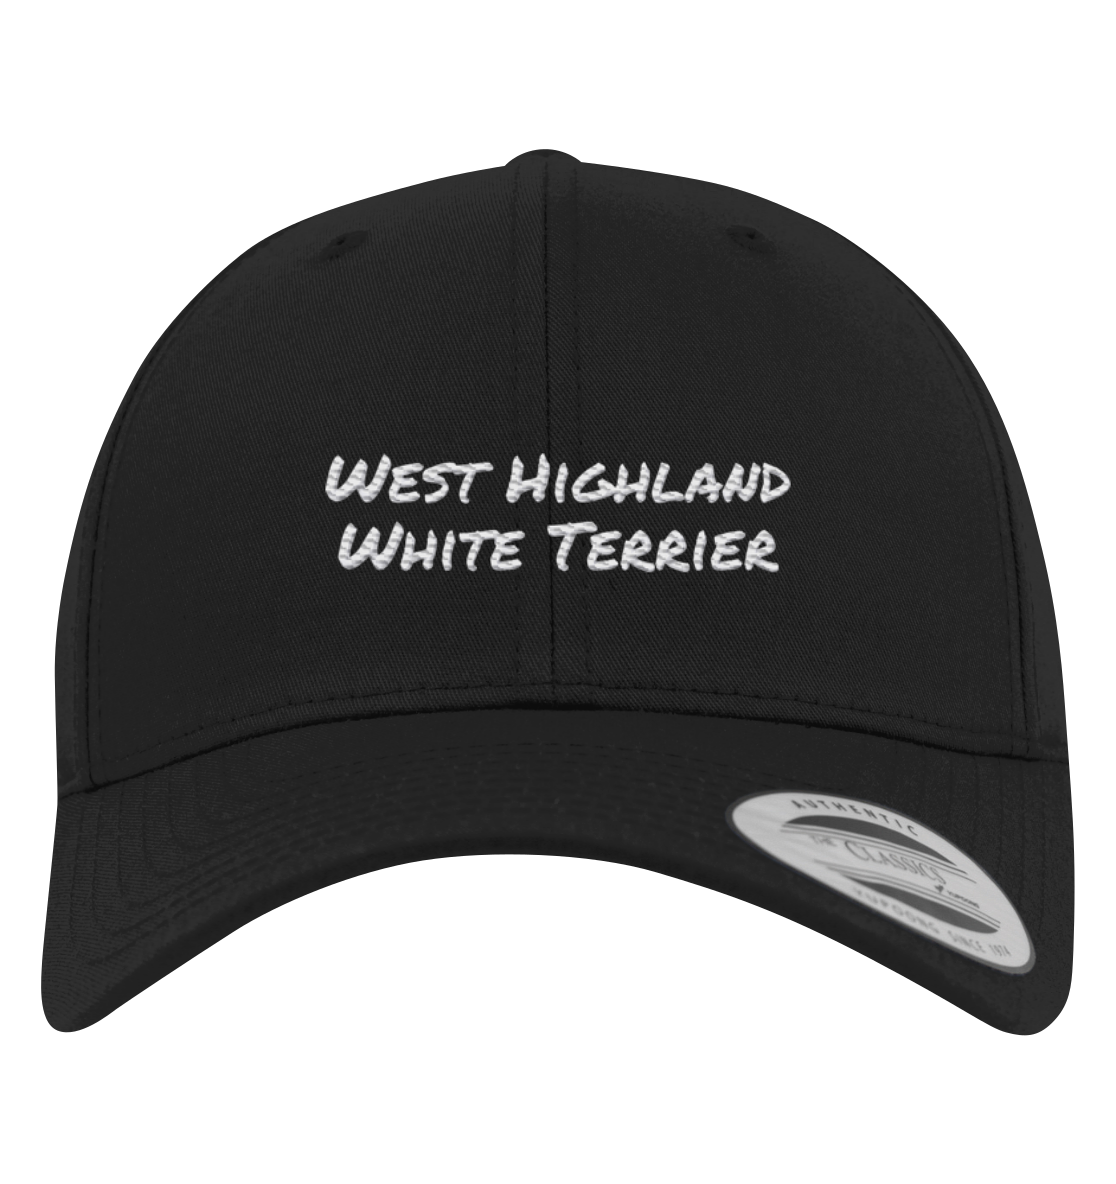 West Highland White Terrier - Premium Baseball Cap